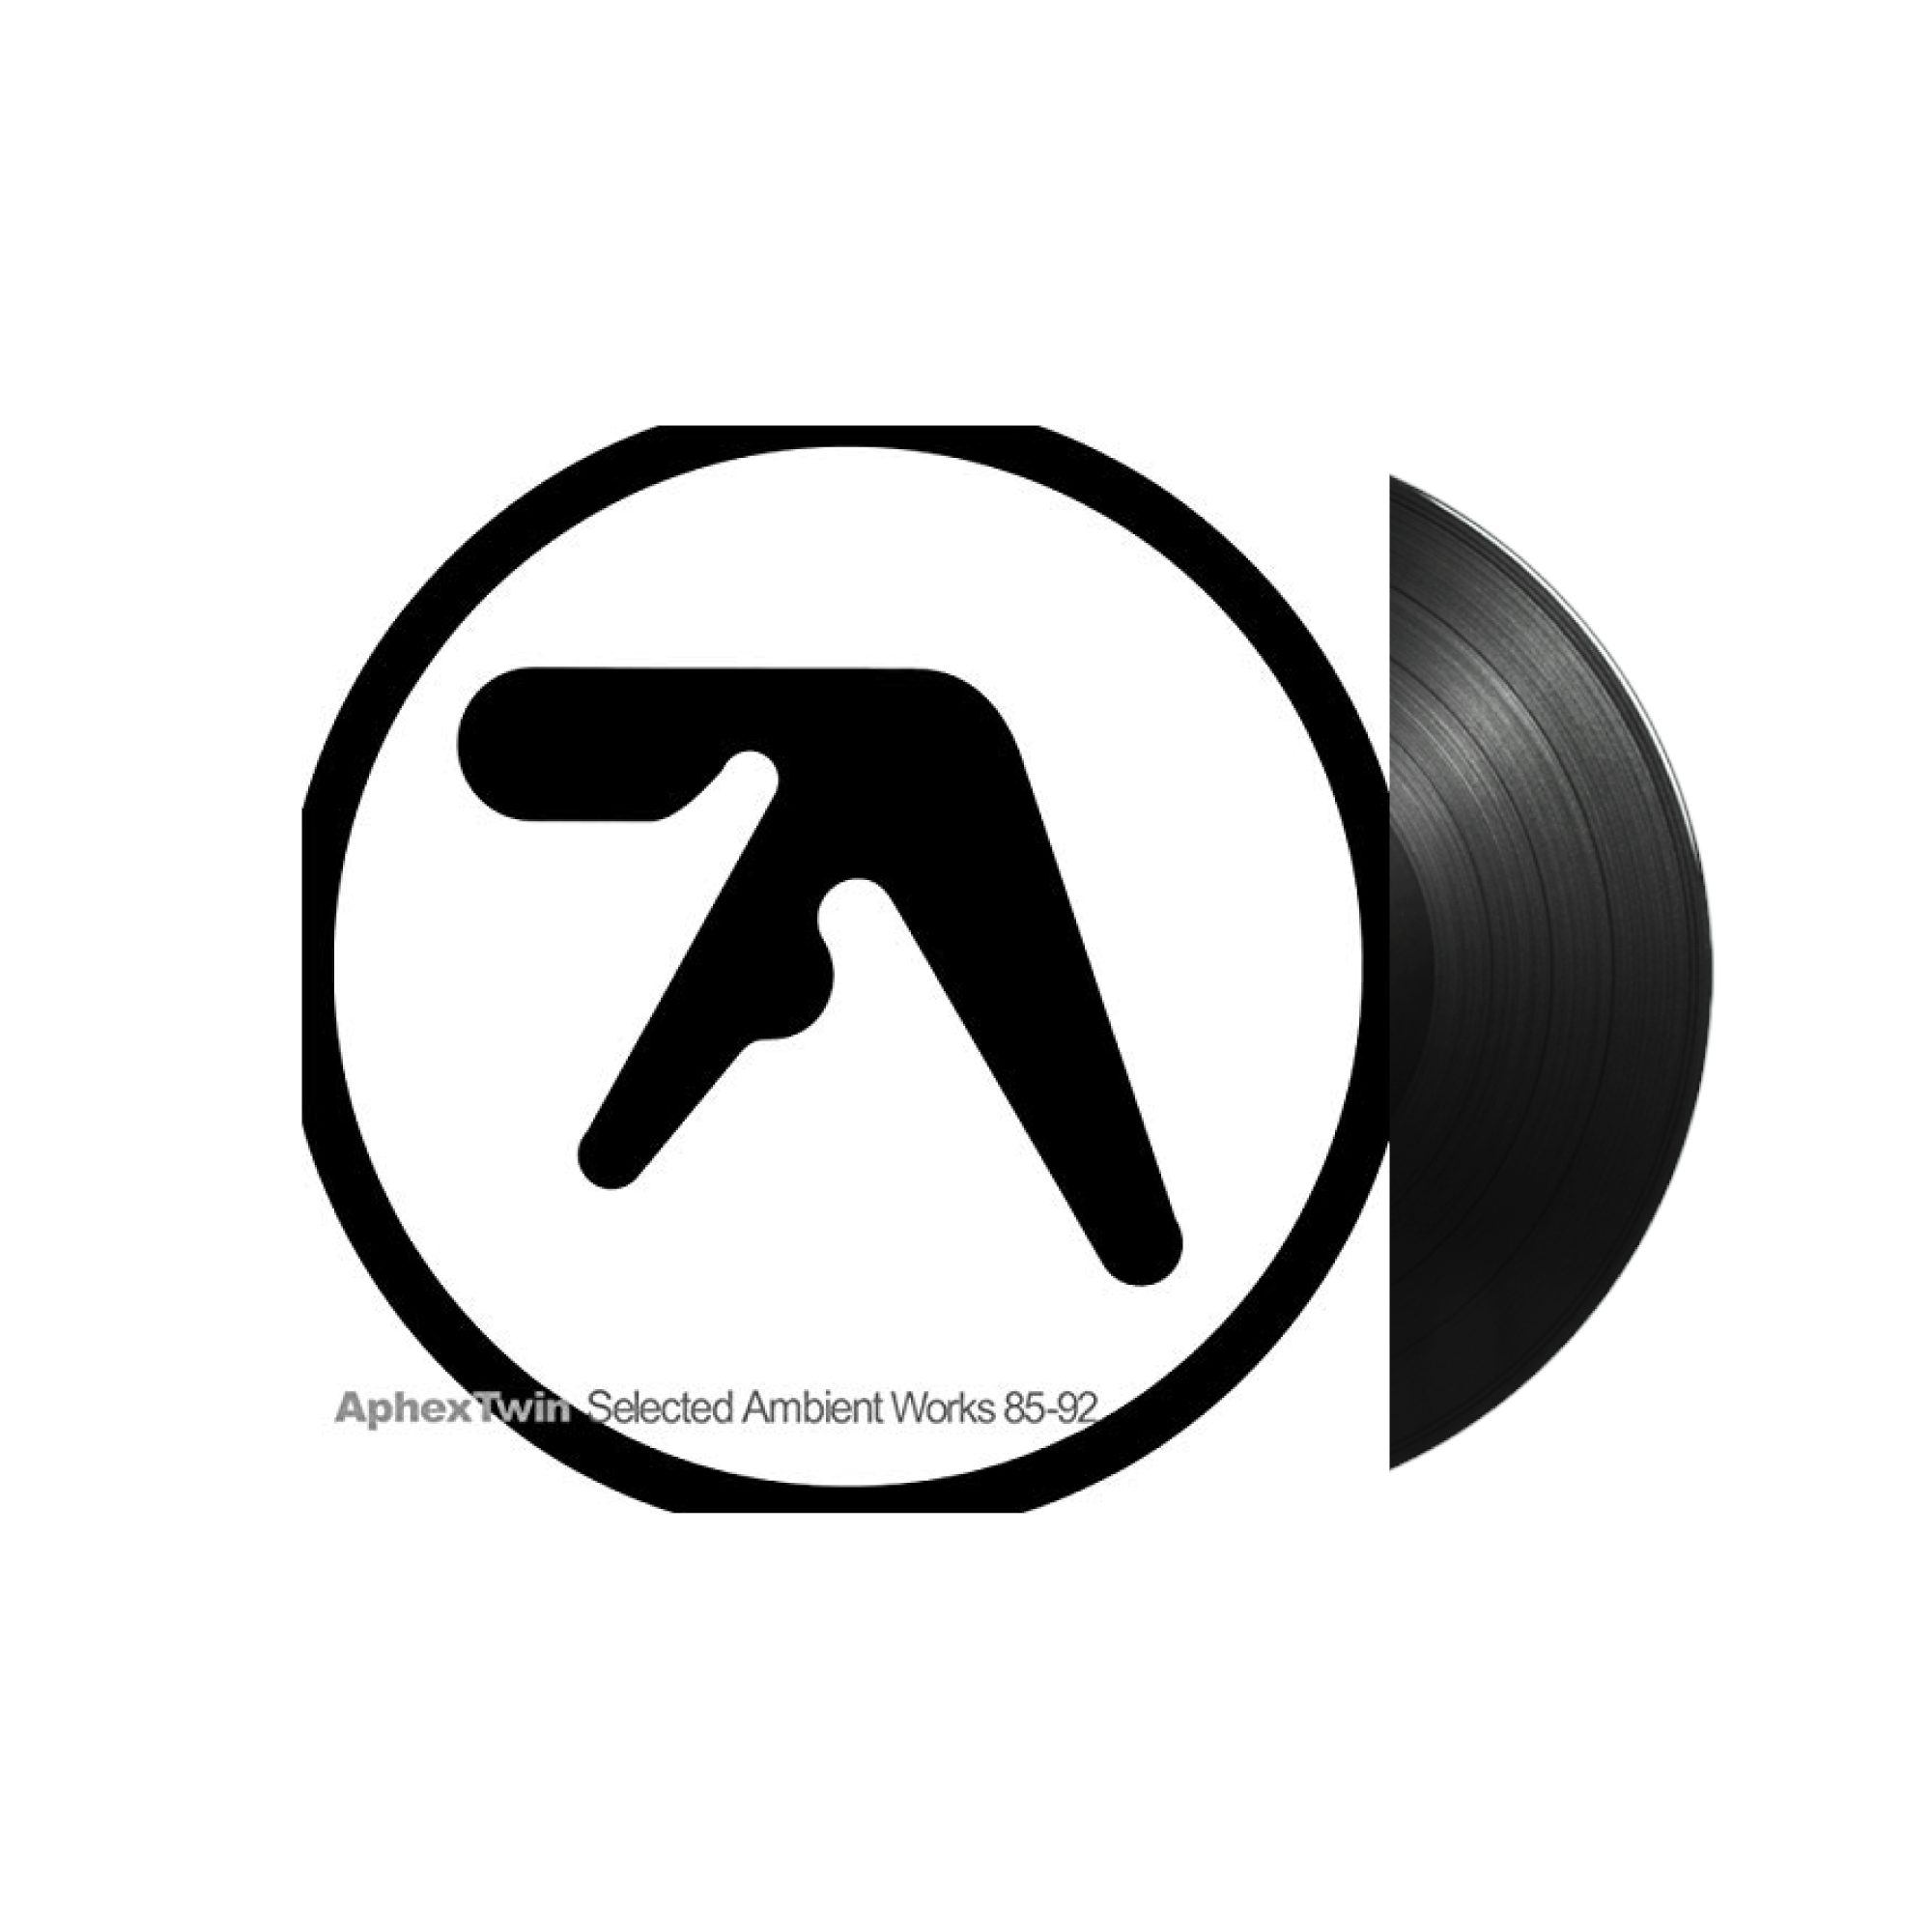 2021年最新海外 Aphex Twin Ambient work85-92 LP Bel-orgi kead.al